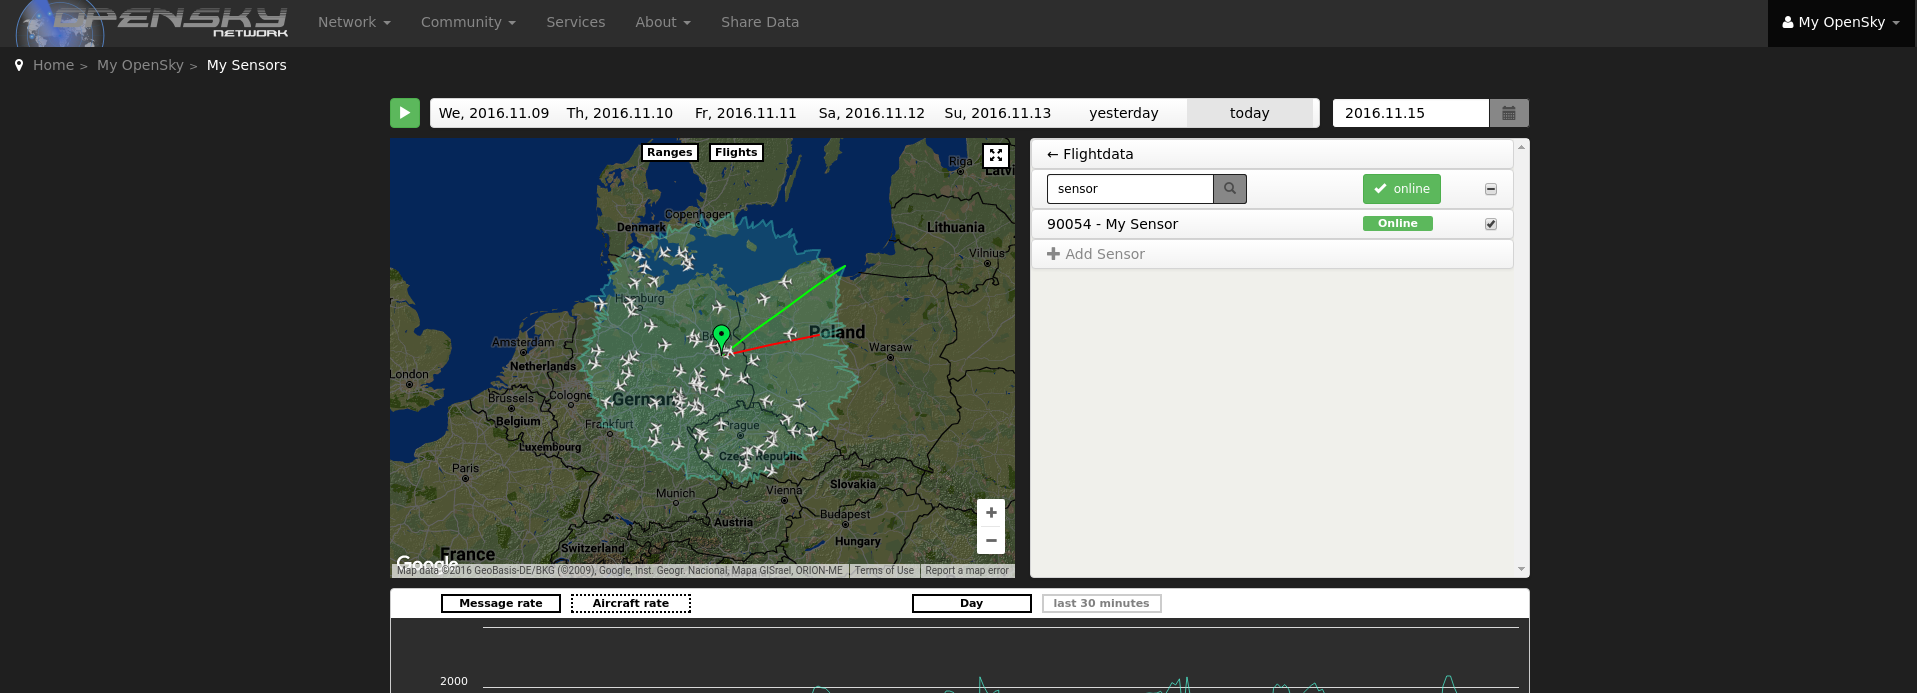 New OpenSky Network sensor on the map